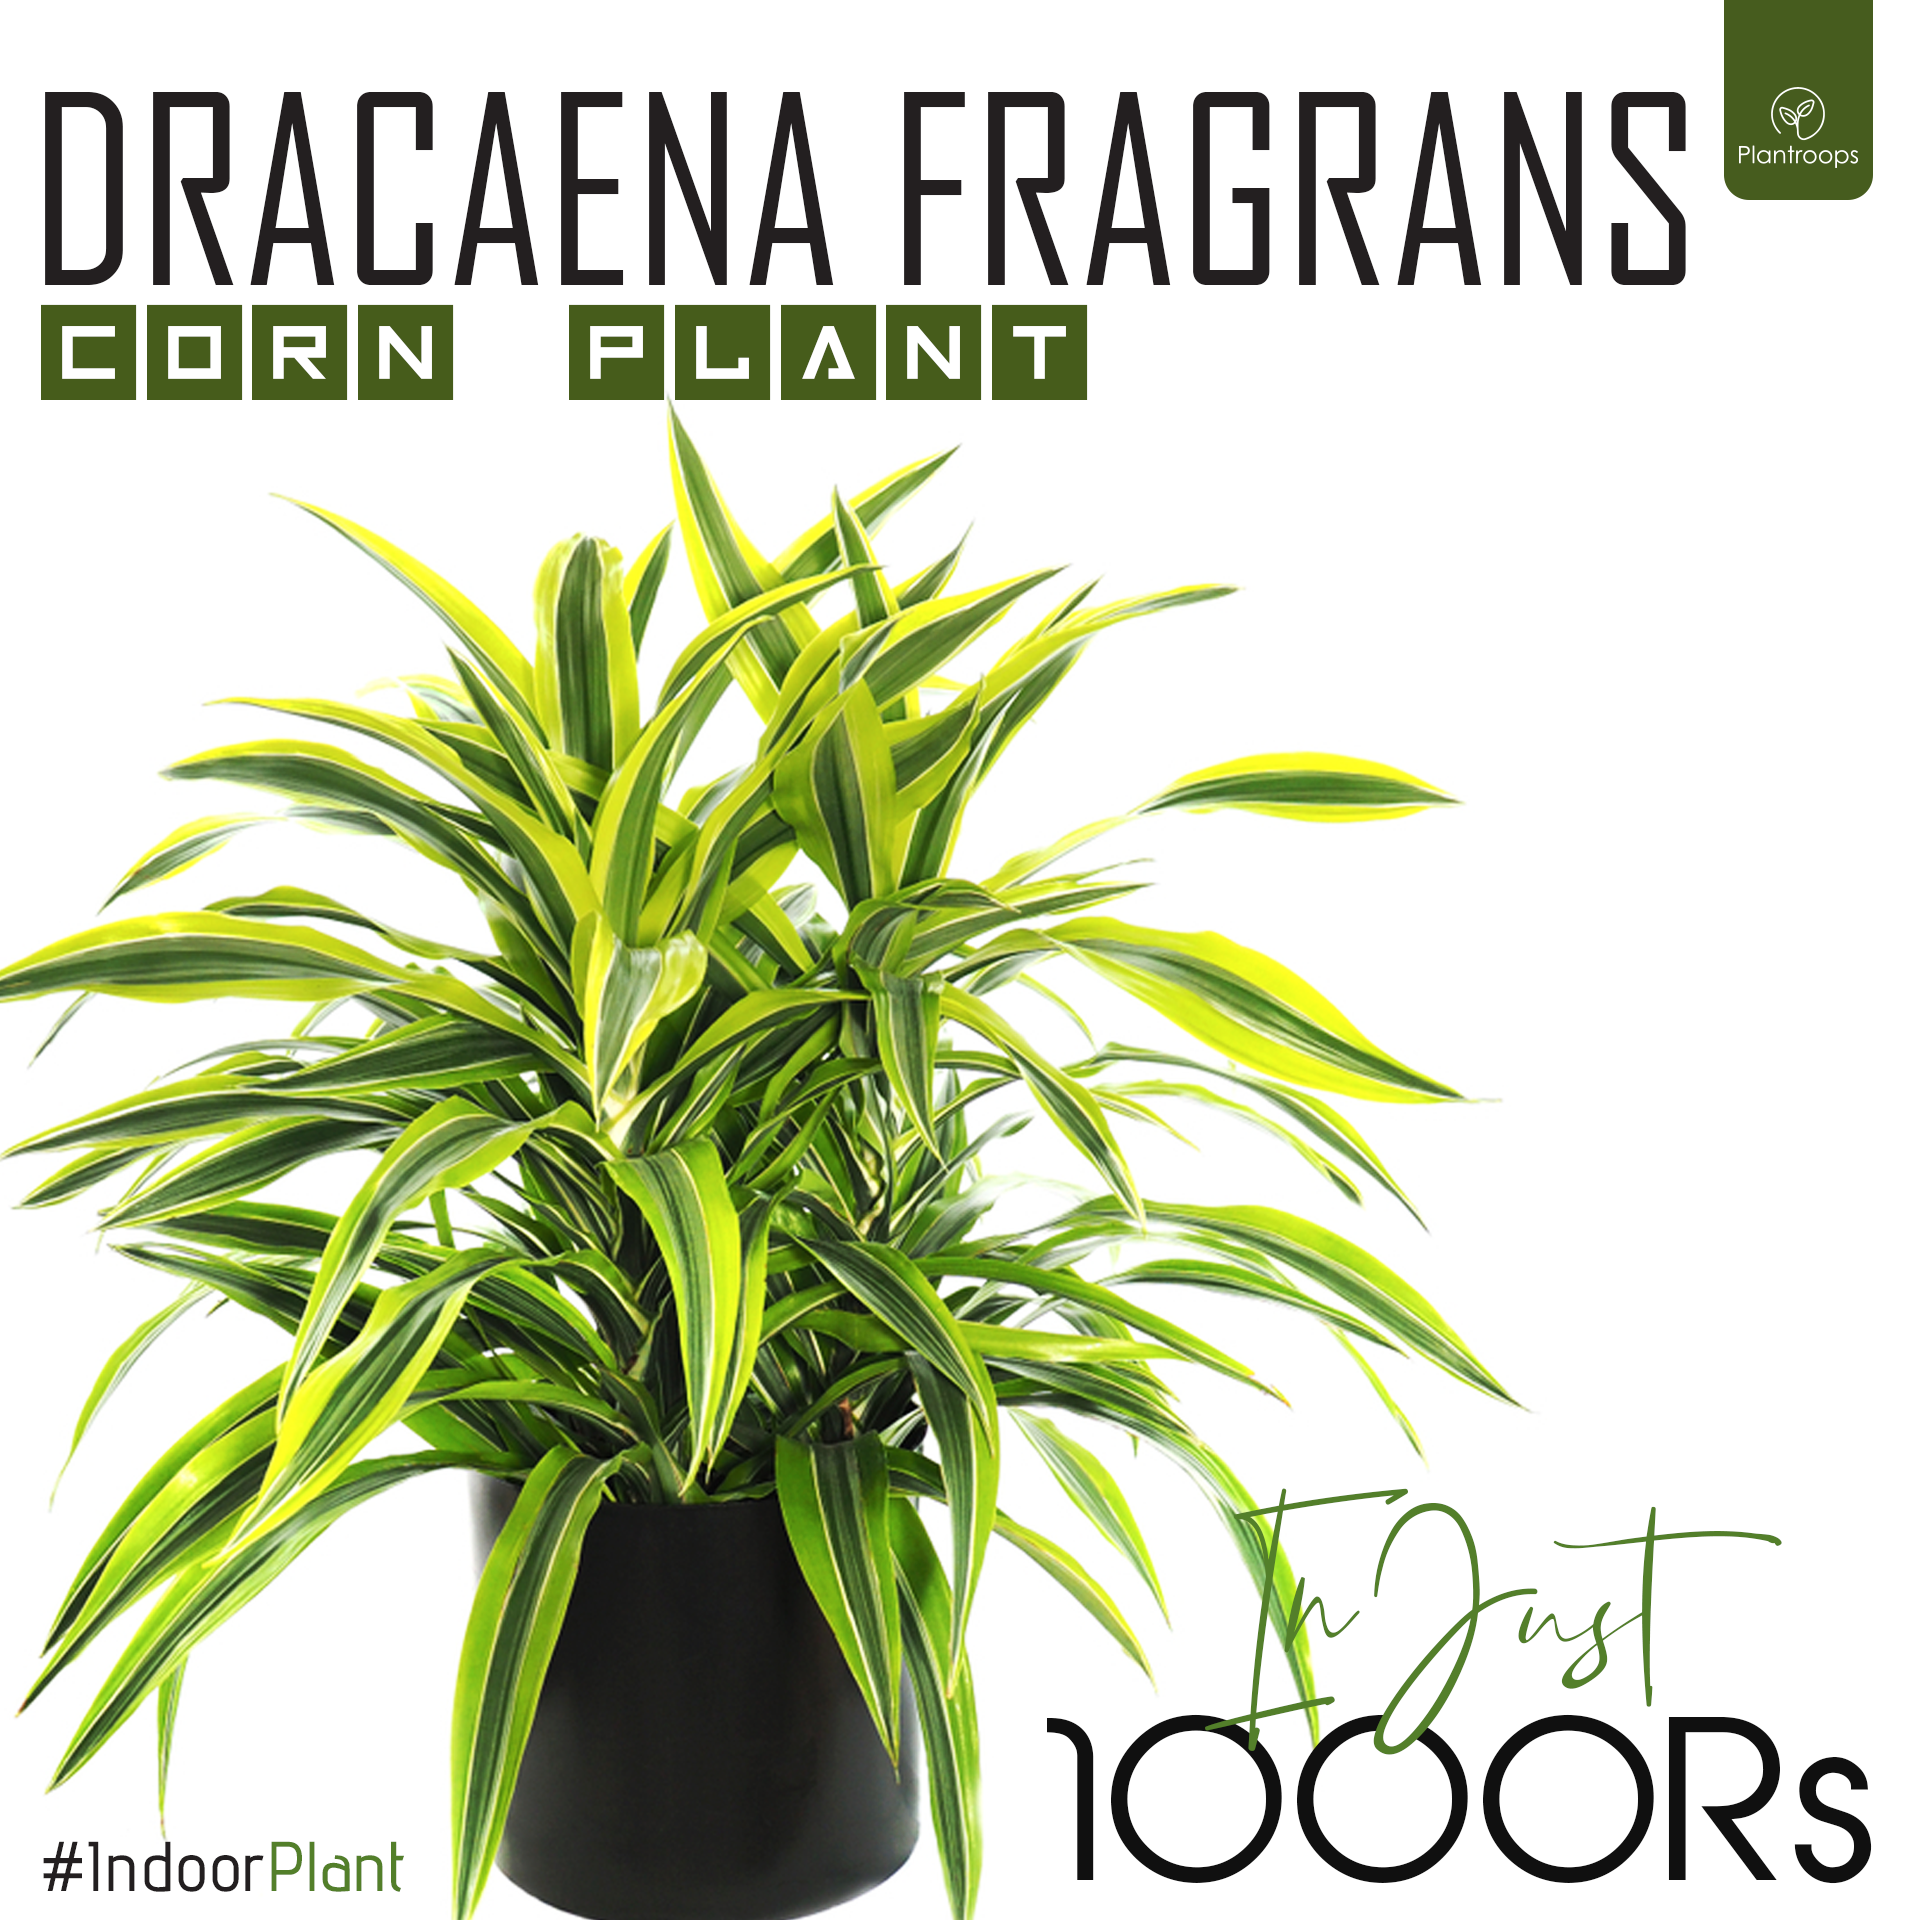 DRACAENA FRAGRANS CORN PLANT